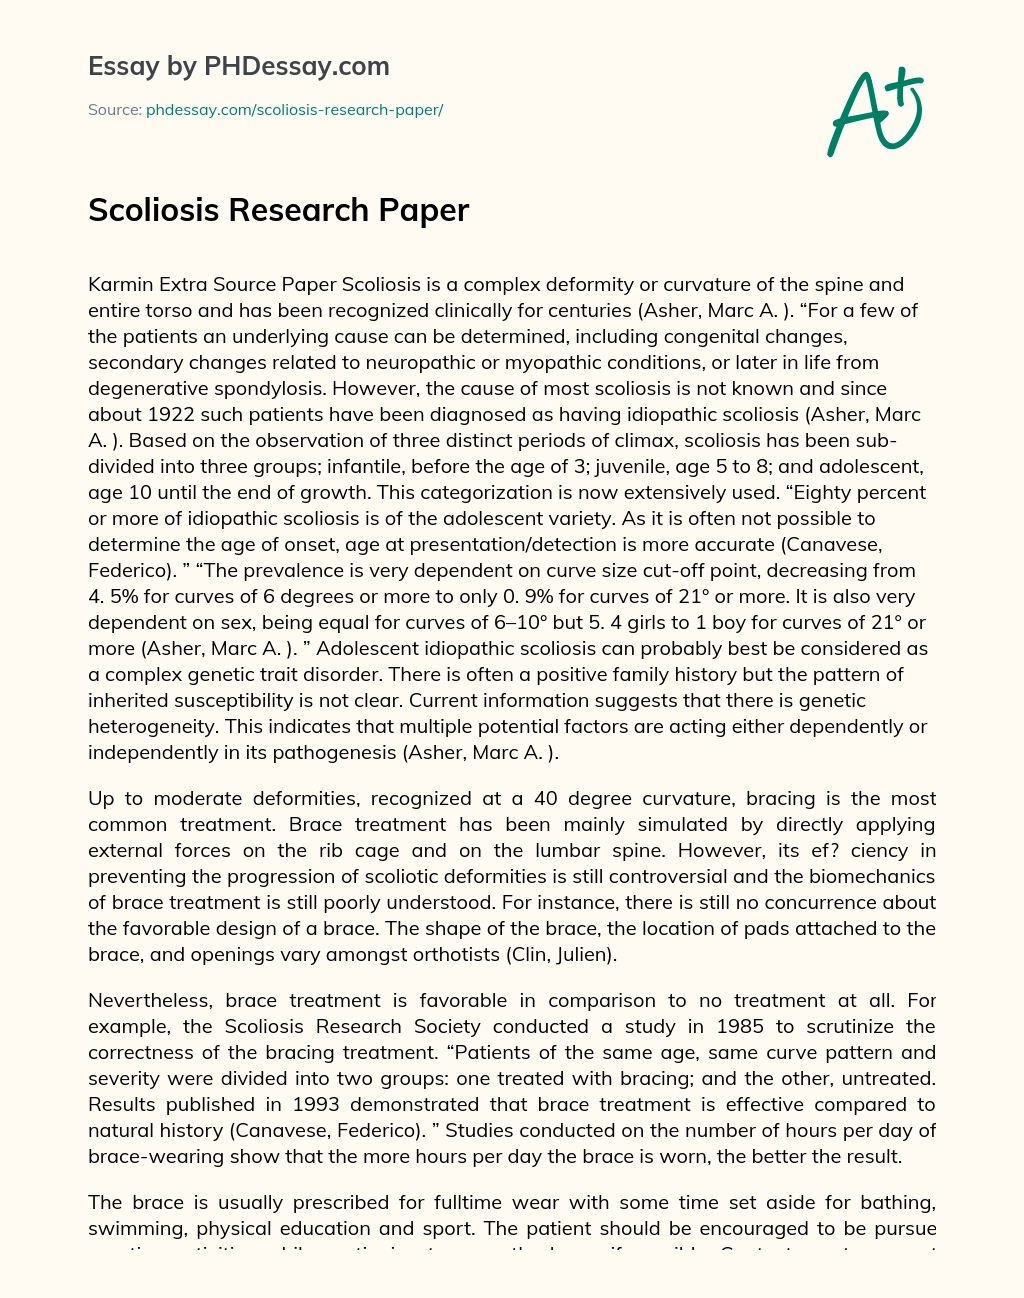 Scoliosis Research Paper essay